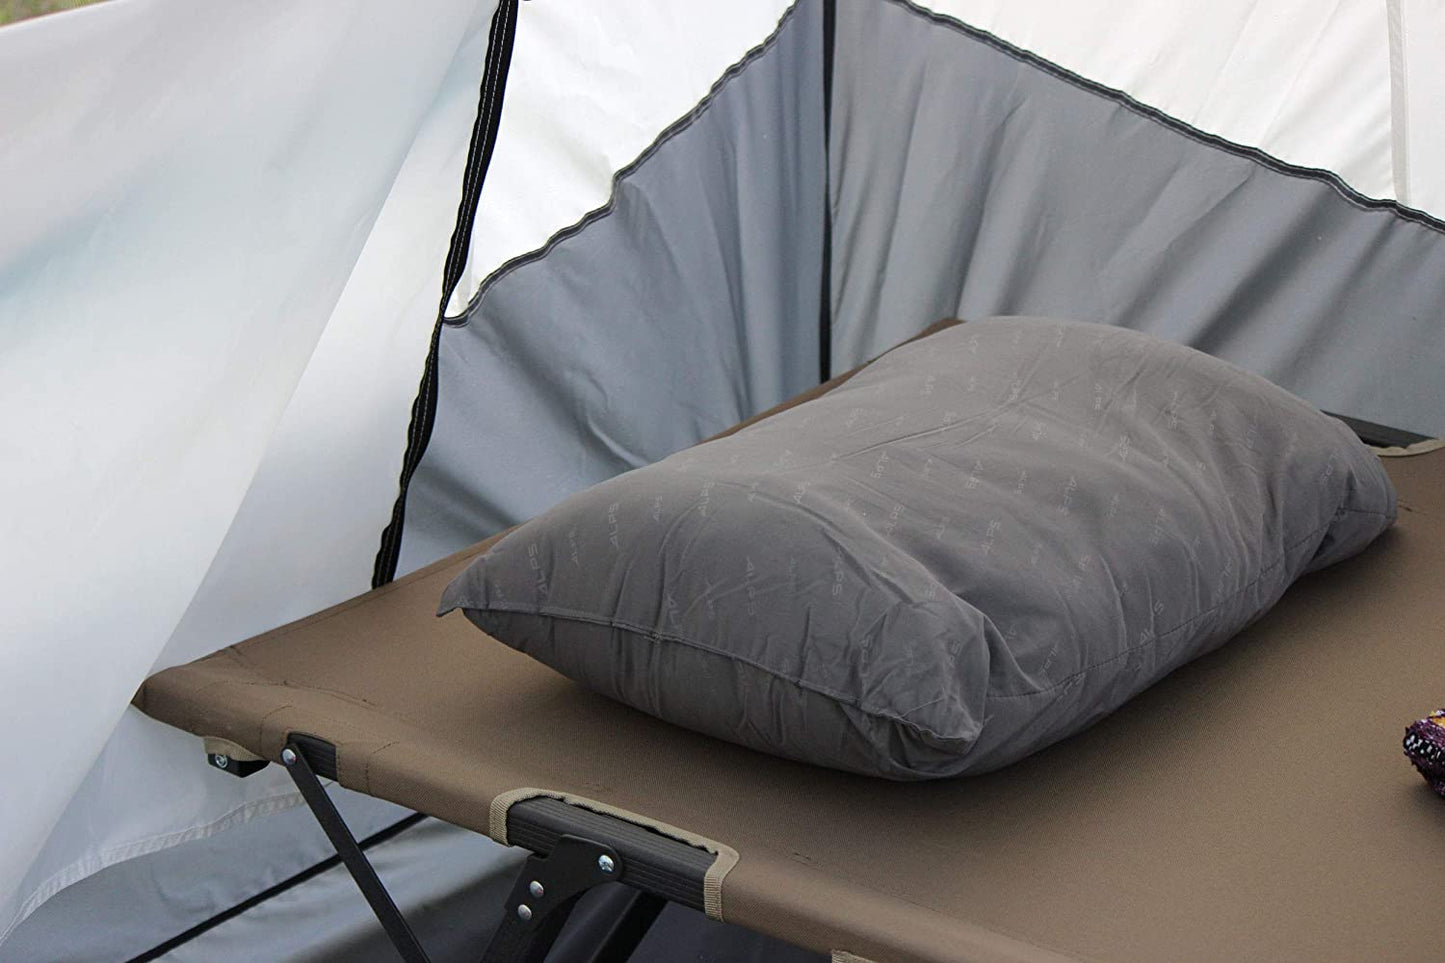 ALPS Mountaineering MicroFiber Camp Pillow 16"x24" - AL7995843